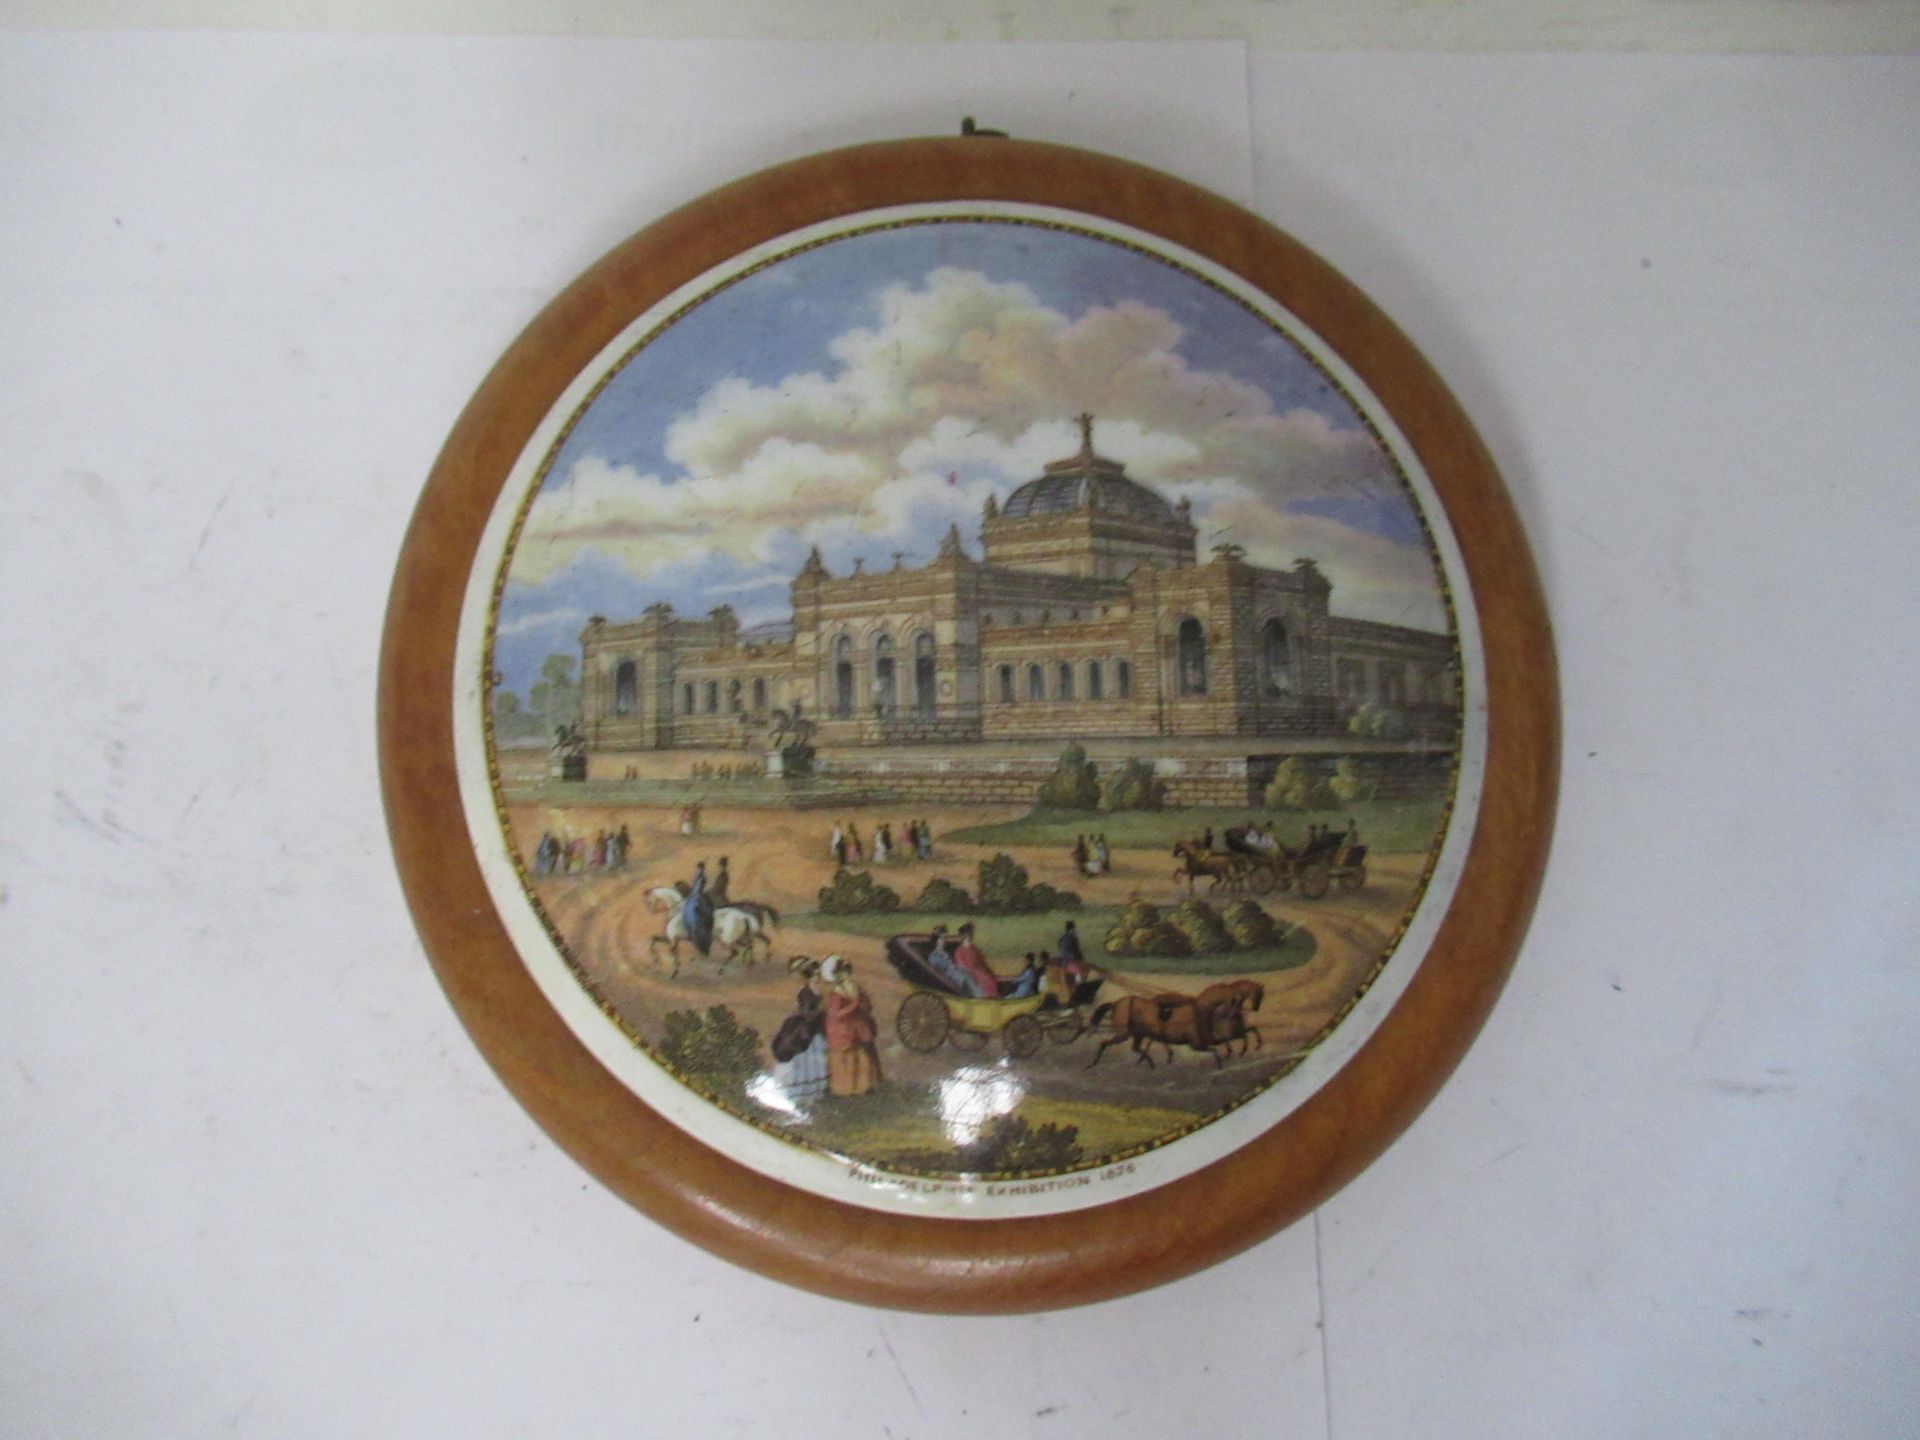 6x Prattware ceramic lids in wooden mounts including 'Philadelphia Exhibition 1878', 'The Ning Po Ri - Image 12 of 15